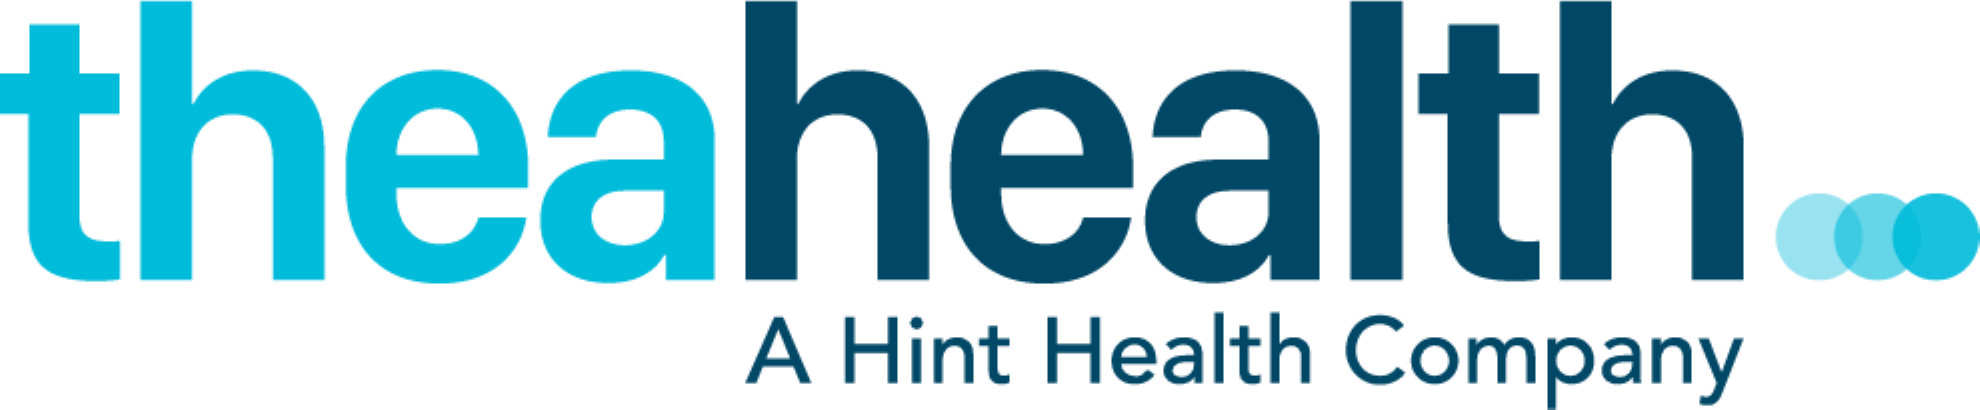 Thea Health